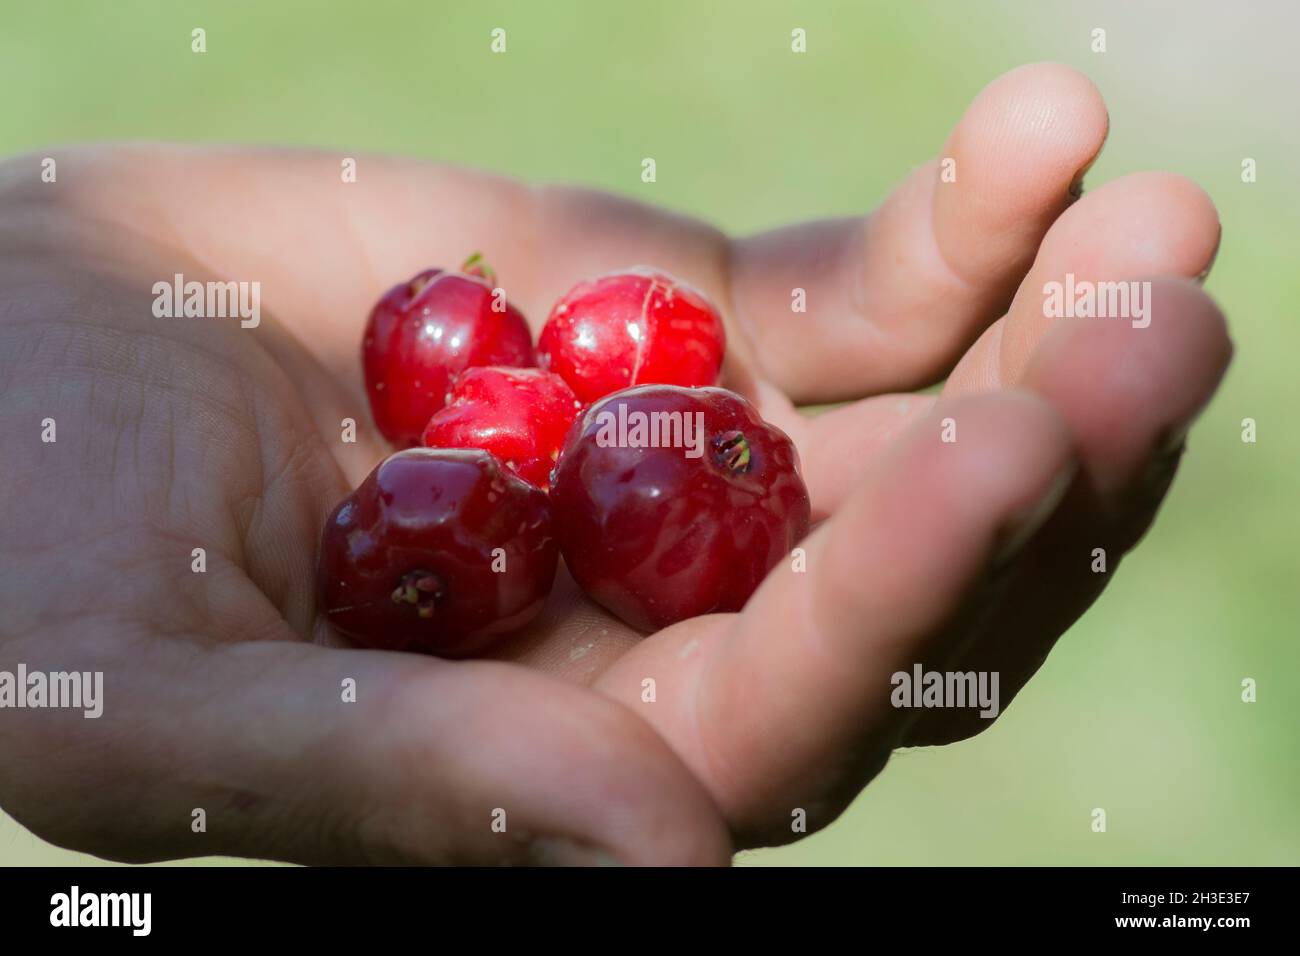 Hand full of Pitanga (Eugenia uniflora) red fruits. Stock Photo